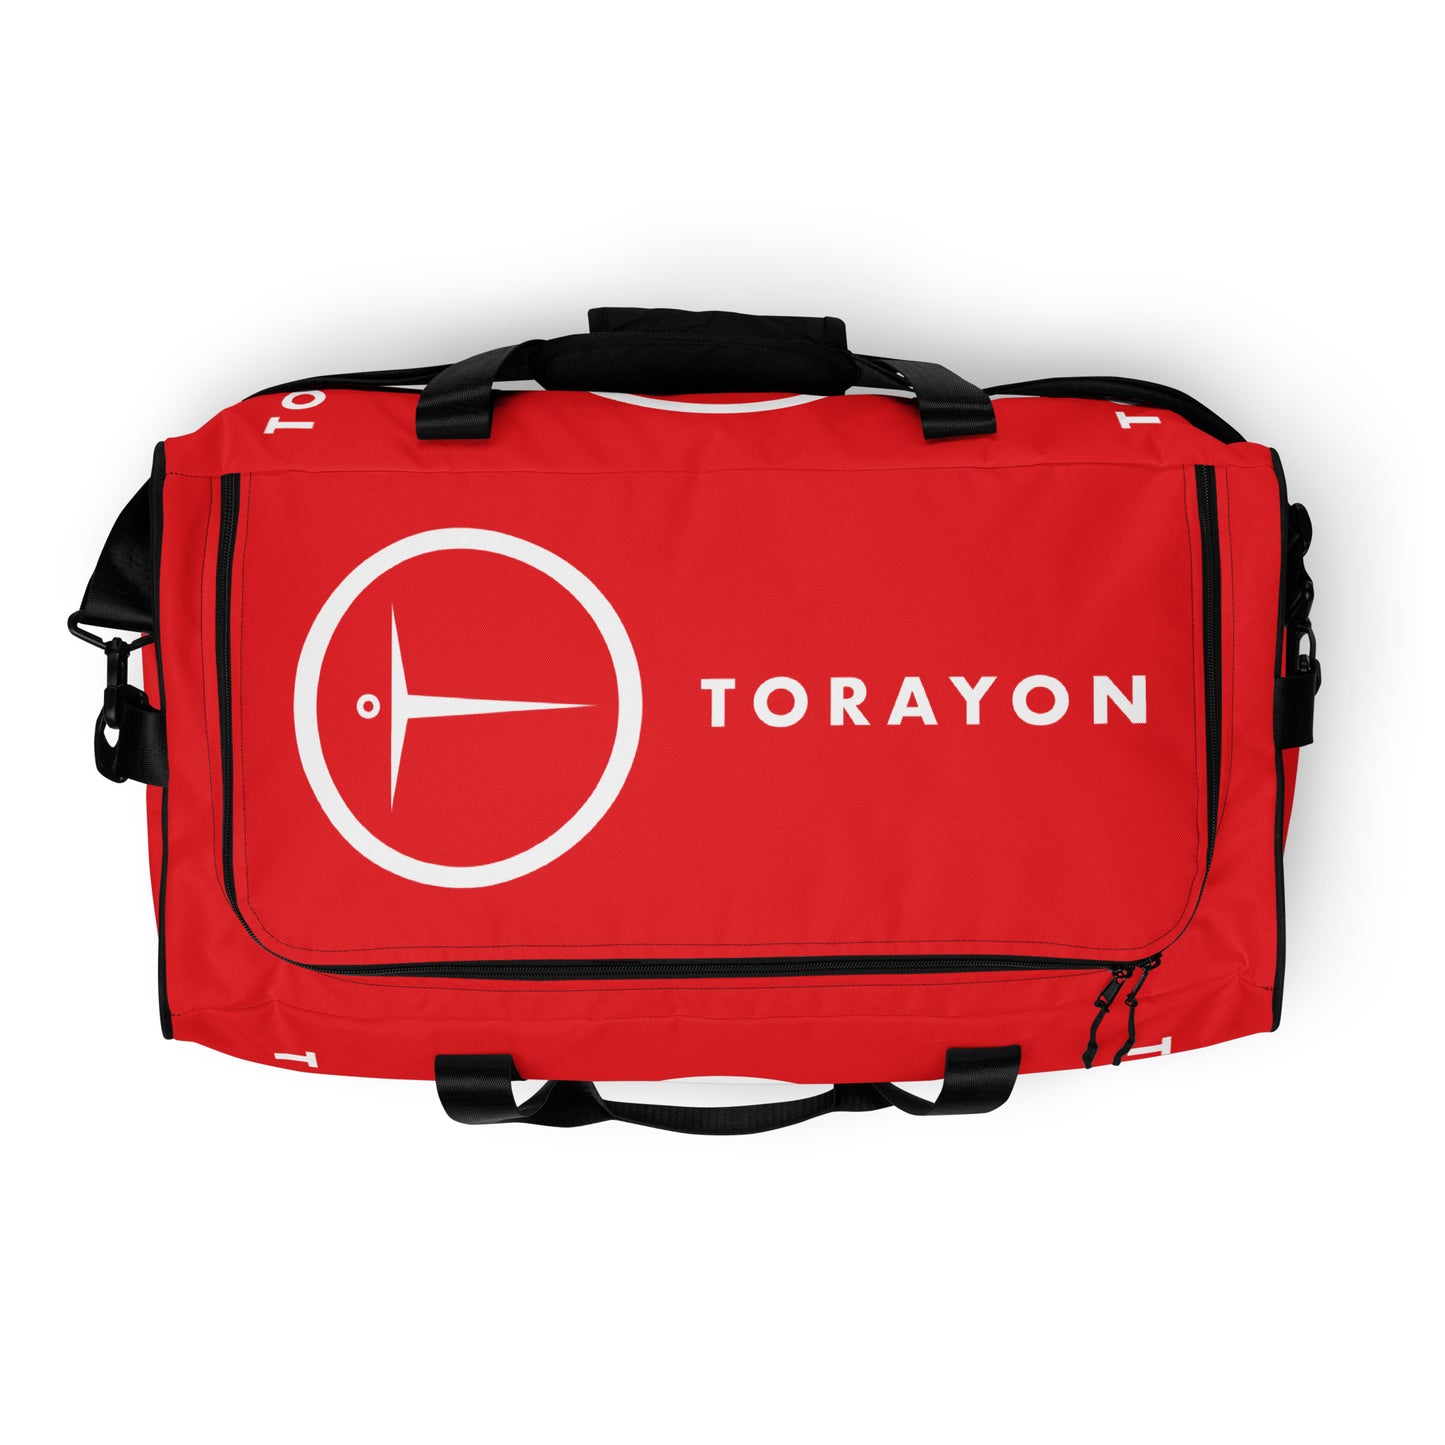 TORAYON Red Duffle bag